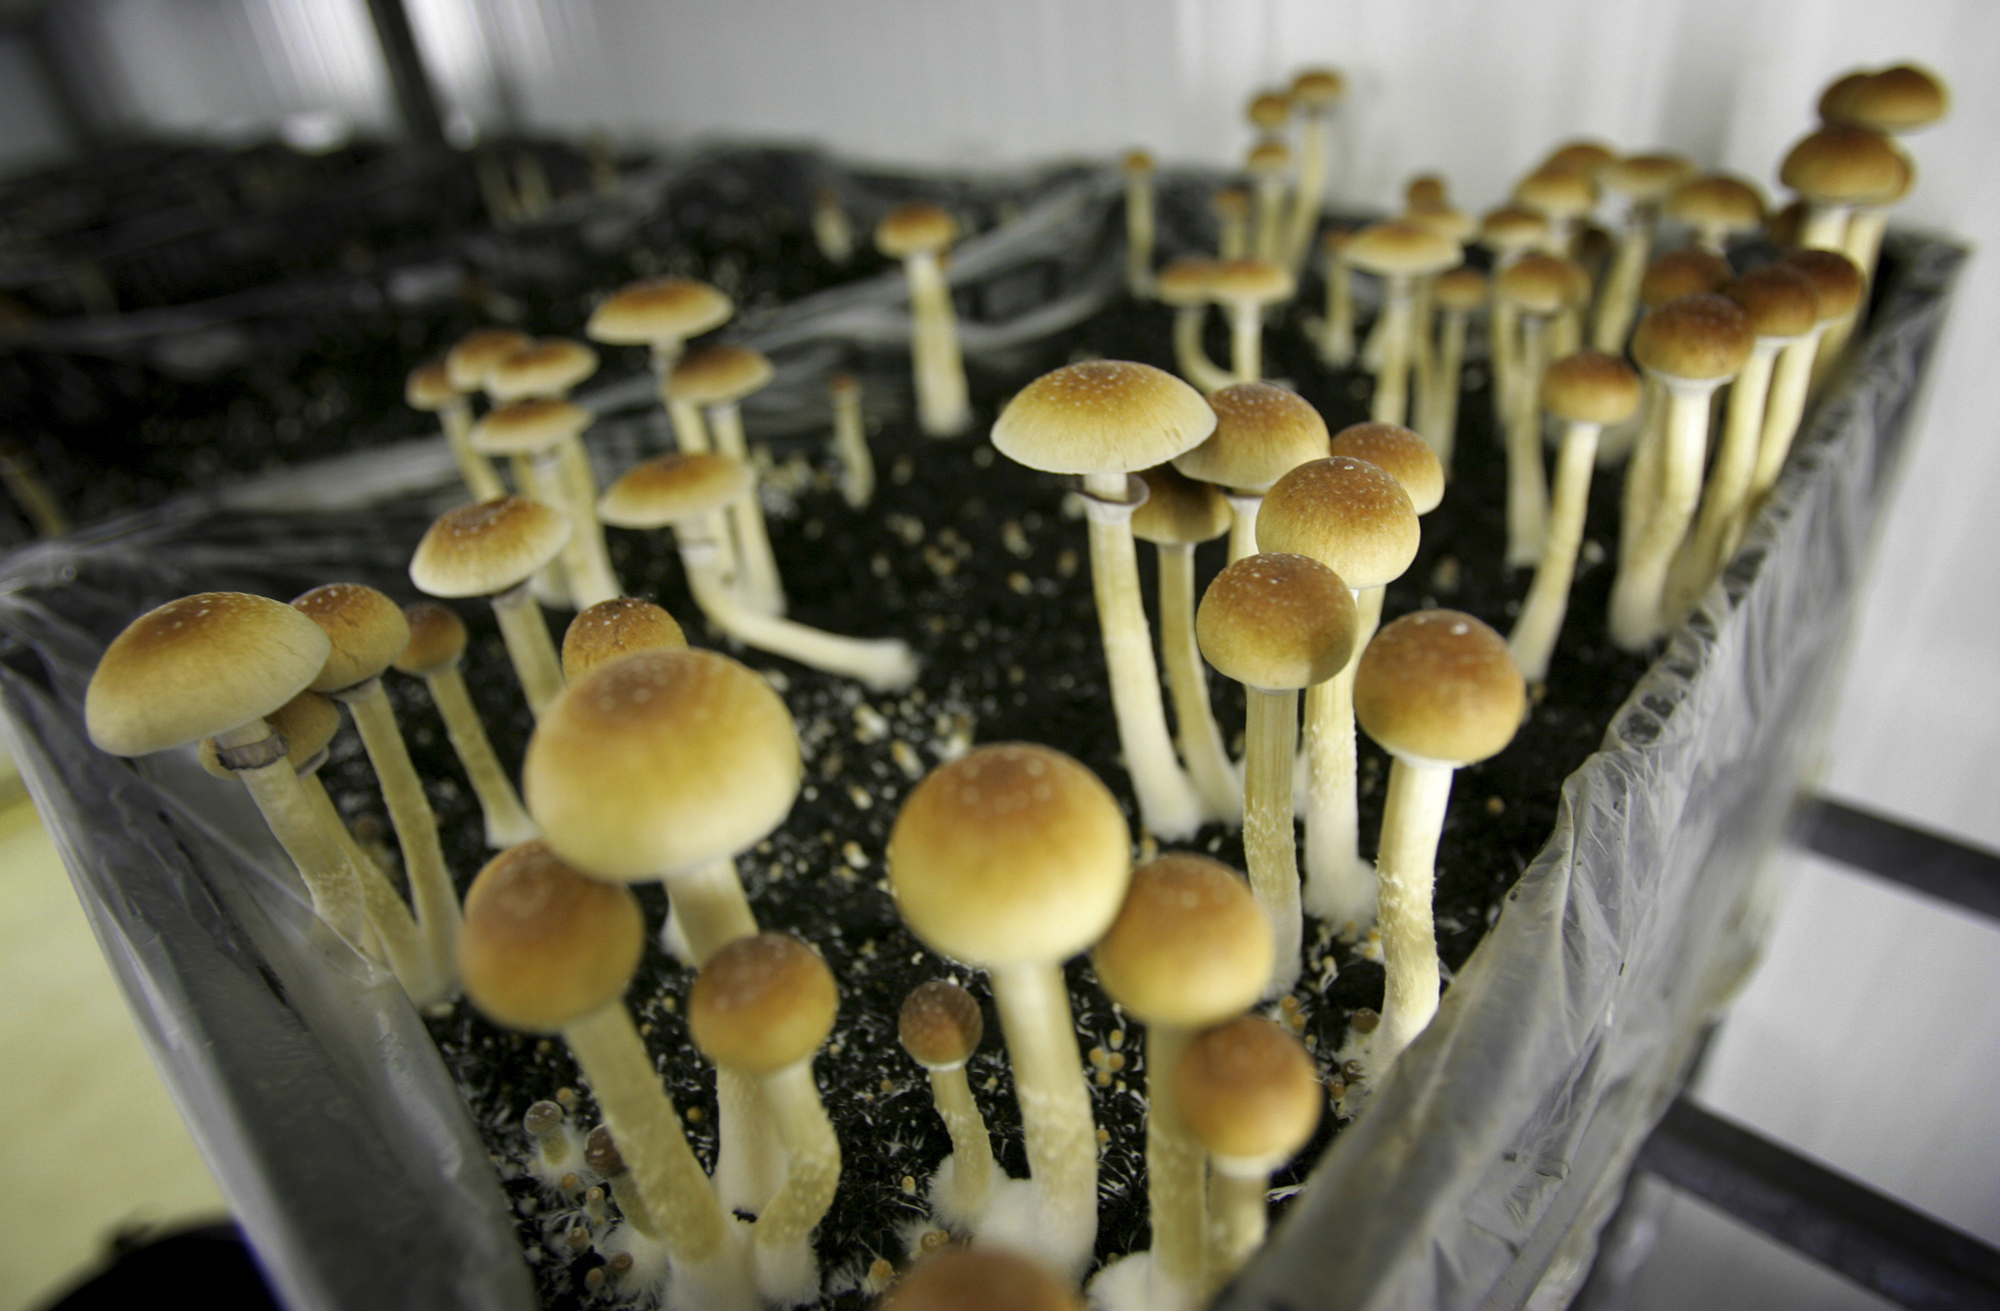 dumb laws and victimless crimes - growing magic mushrooms - 48